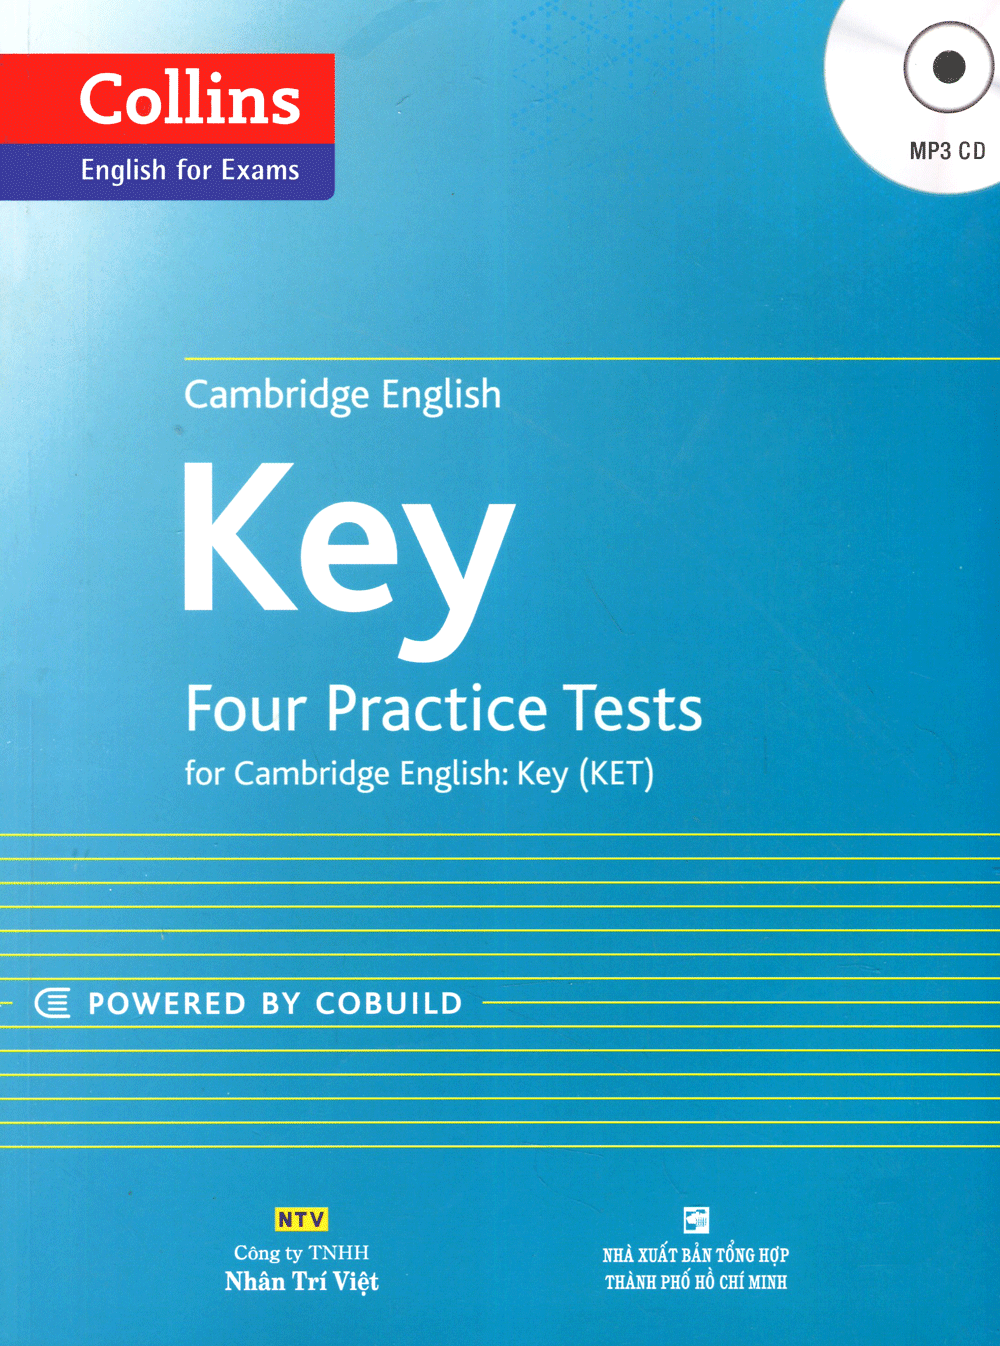 Collins English For Exams - Cambridge English Key